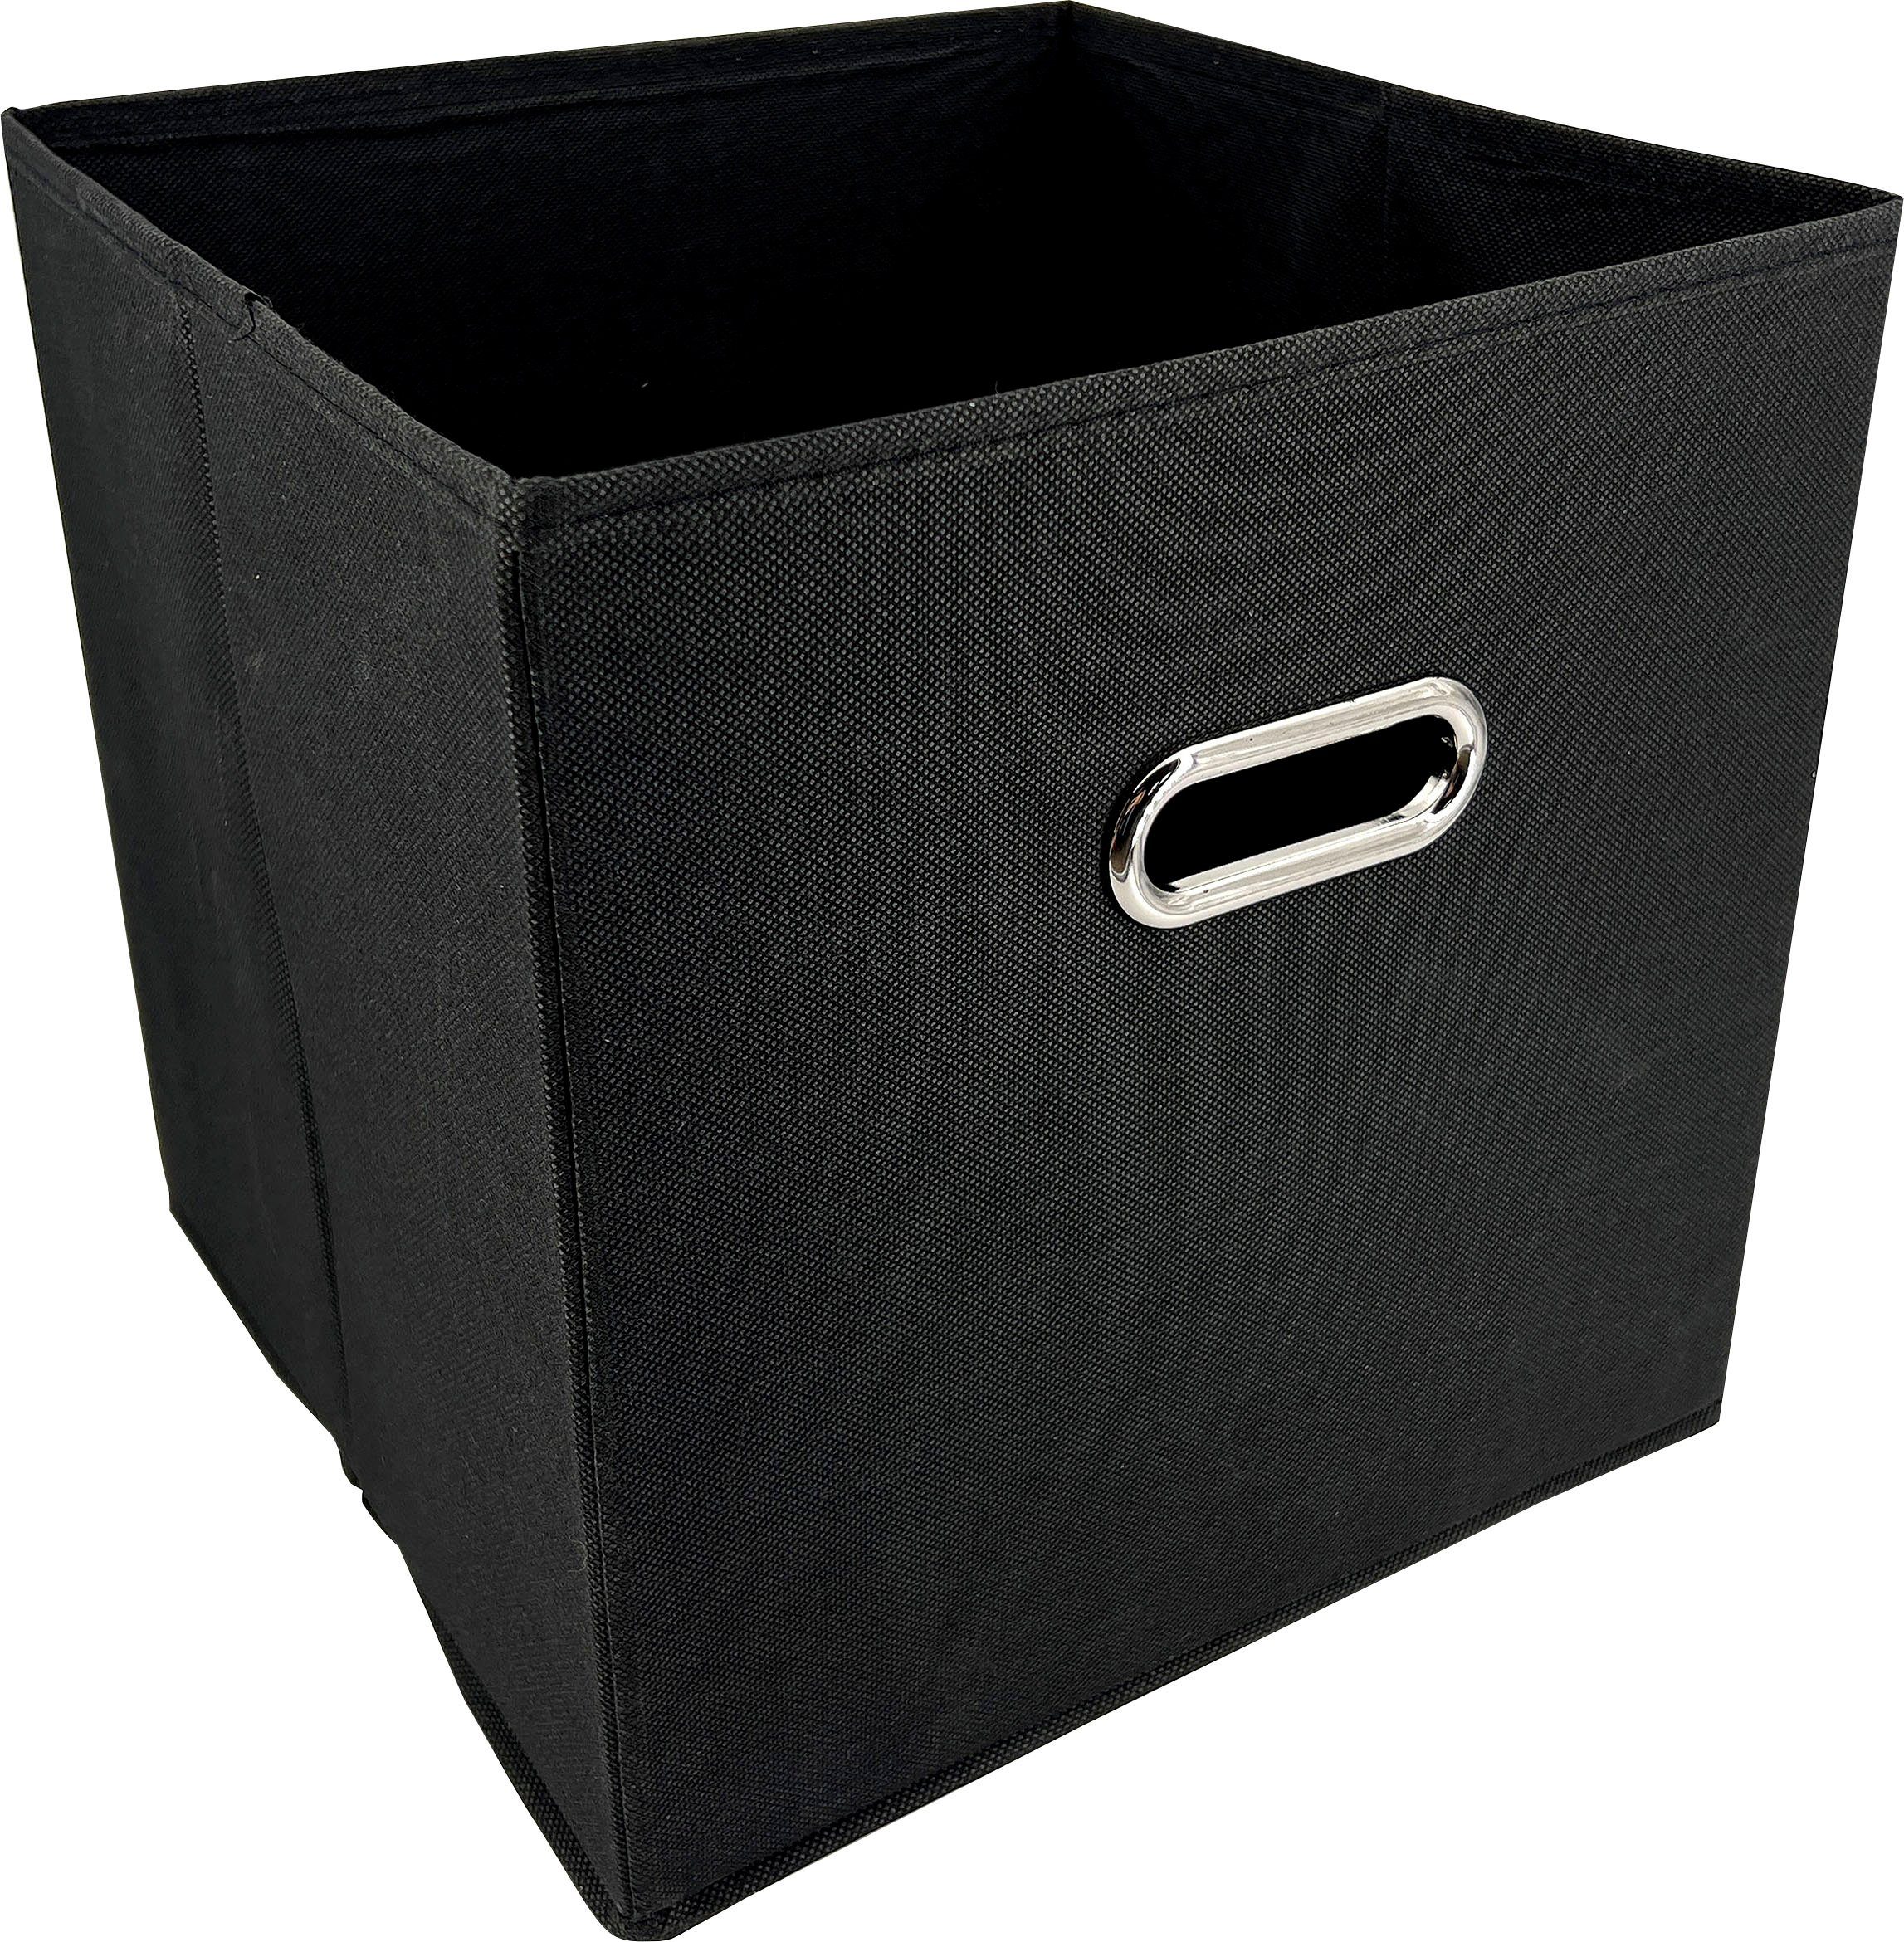 Faltbare klappbare Boxen kaufen » Faltbare Klappboxen | OTTO